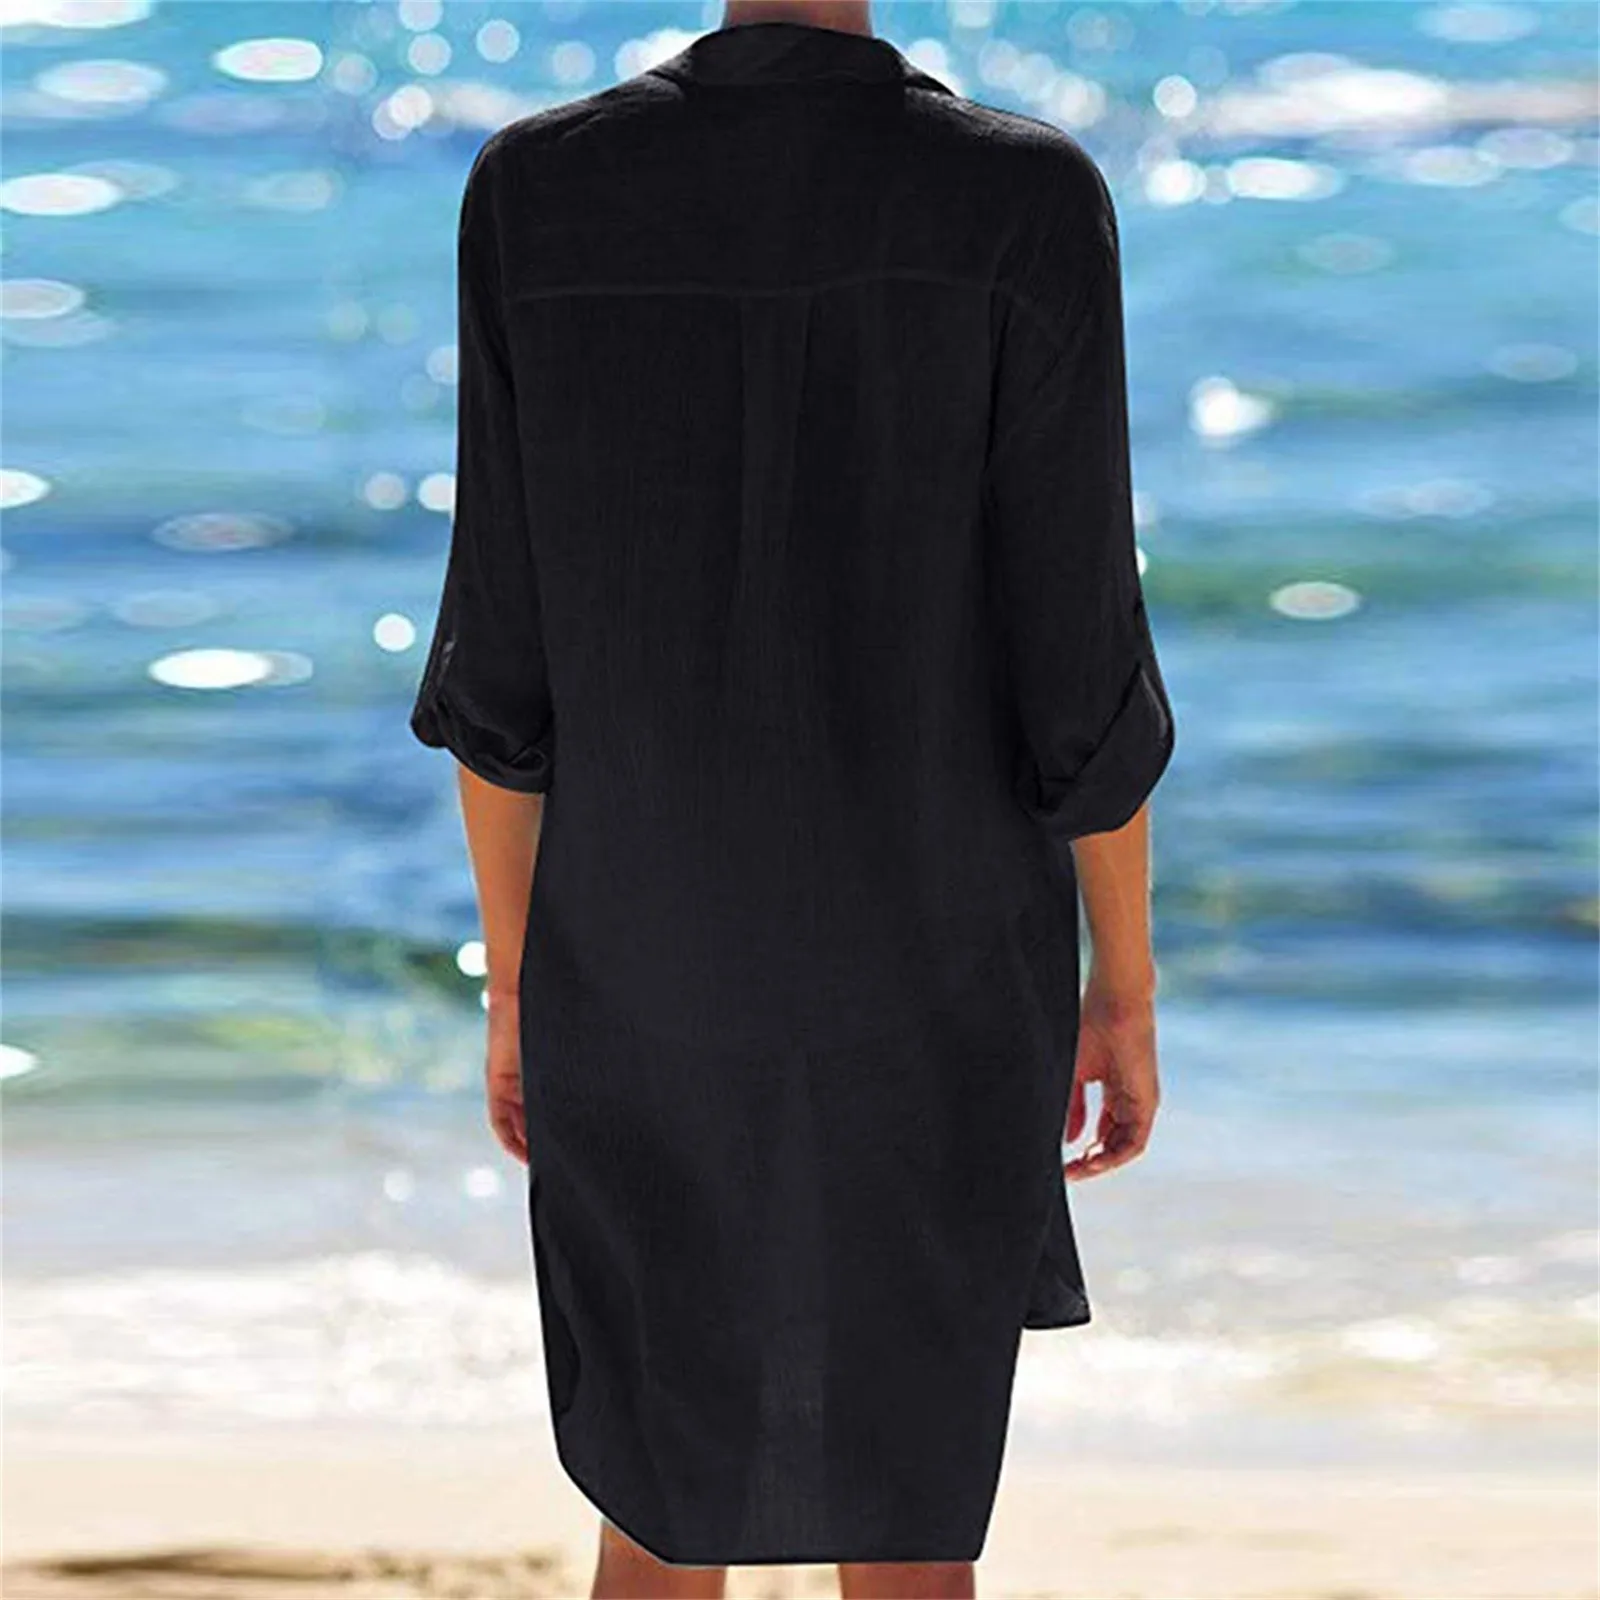 Hot 2022 Cotton Tunics For Beach Women Swimsuit Cover-ups Woman Swimwear Beach Cover Up Beachwear Mini Dress Saida De Praia bikini and cover up set